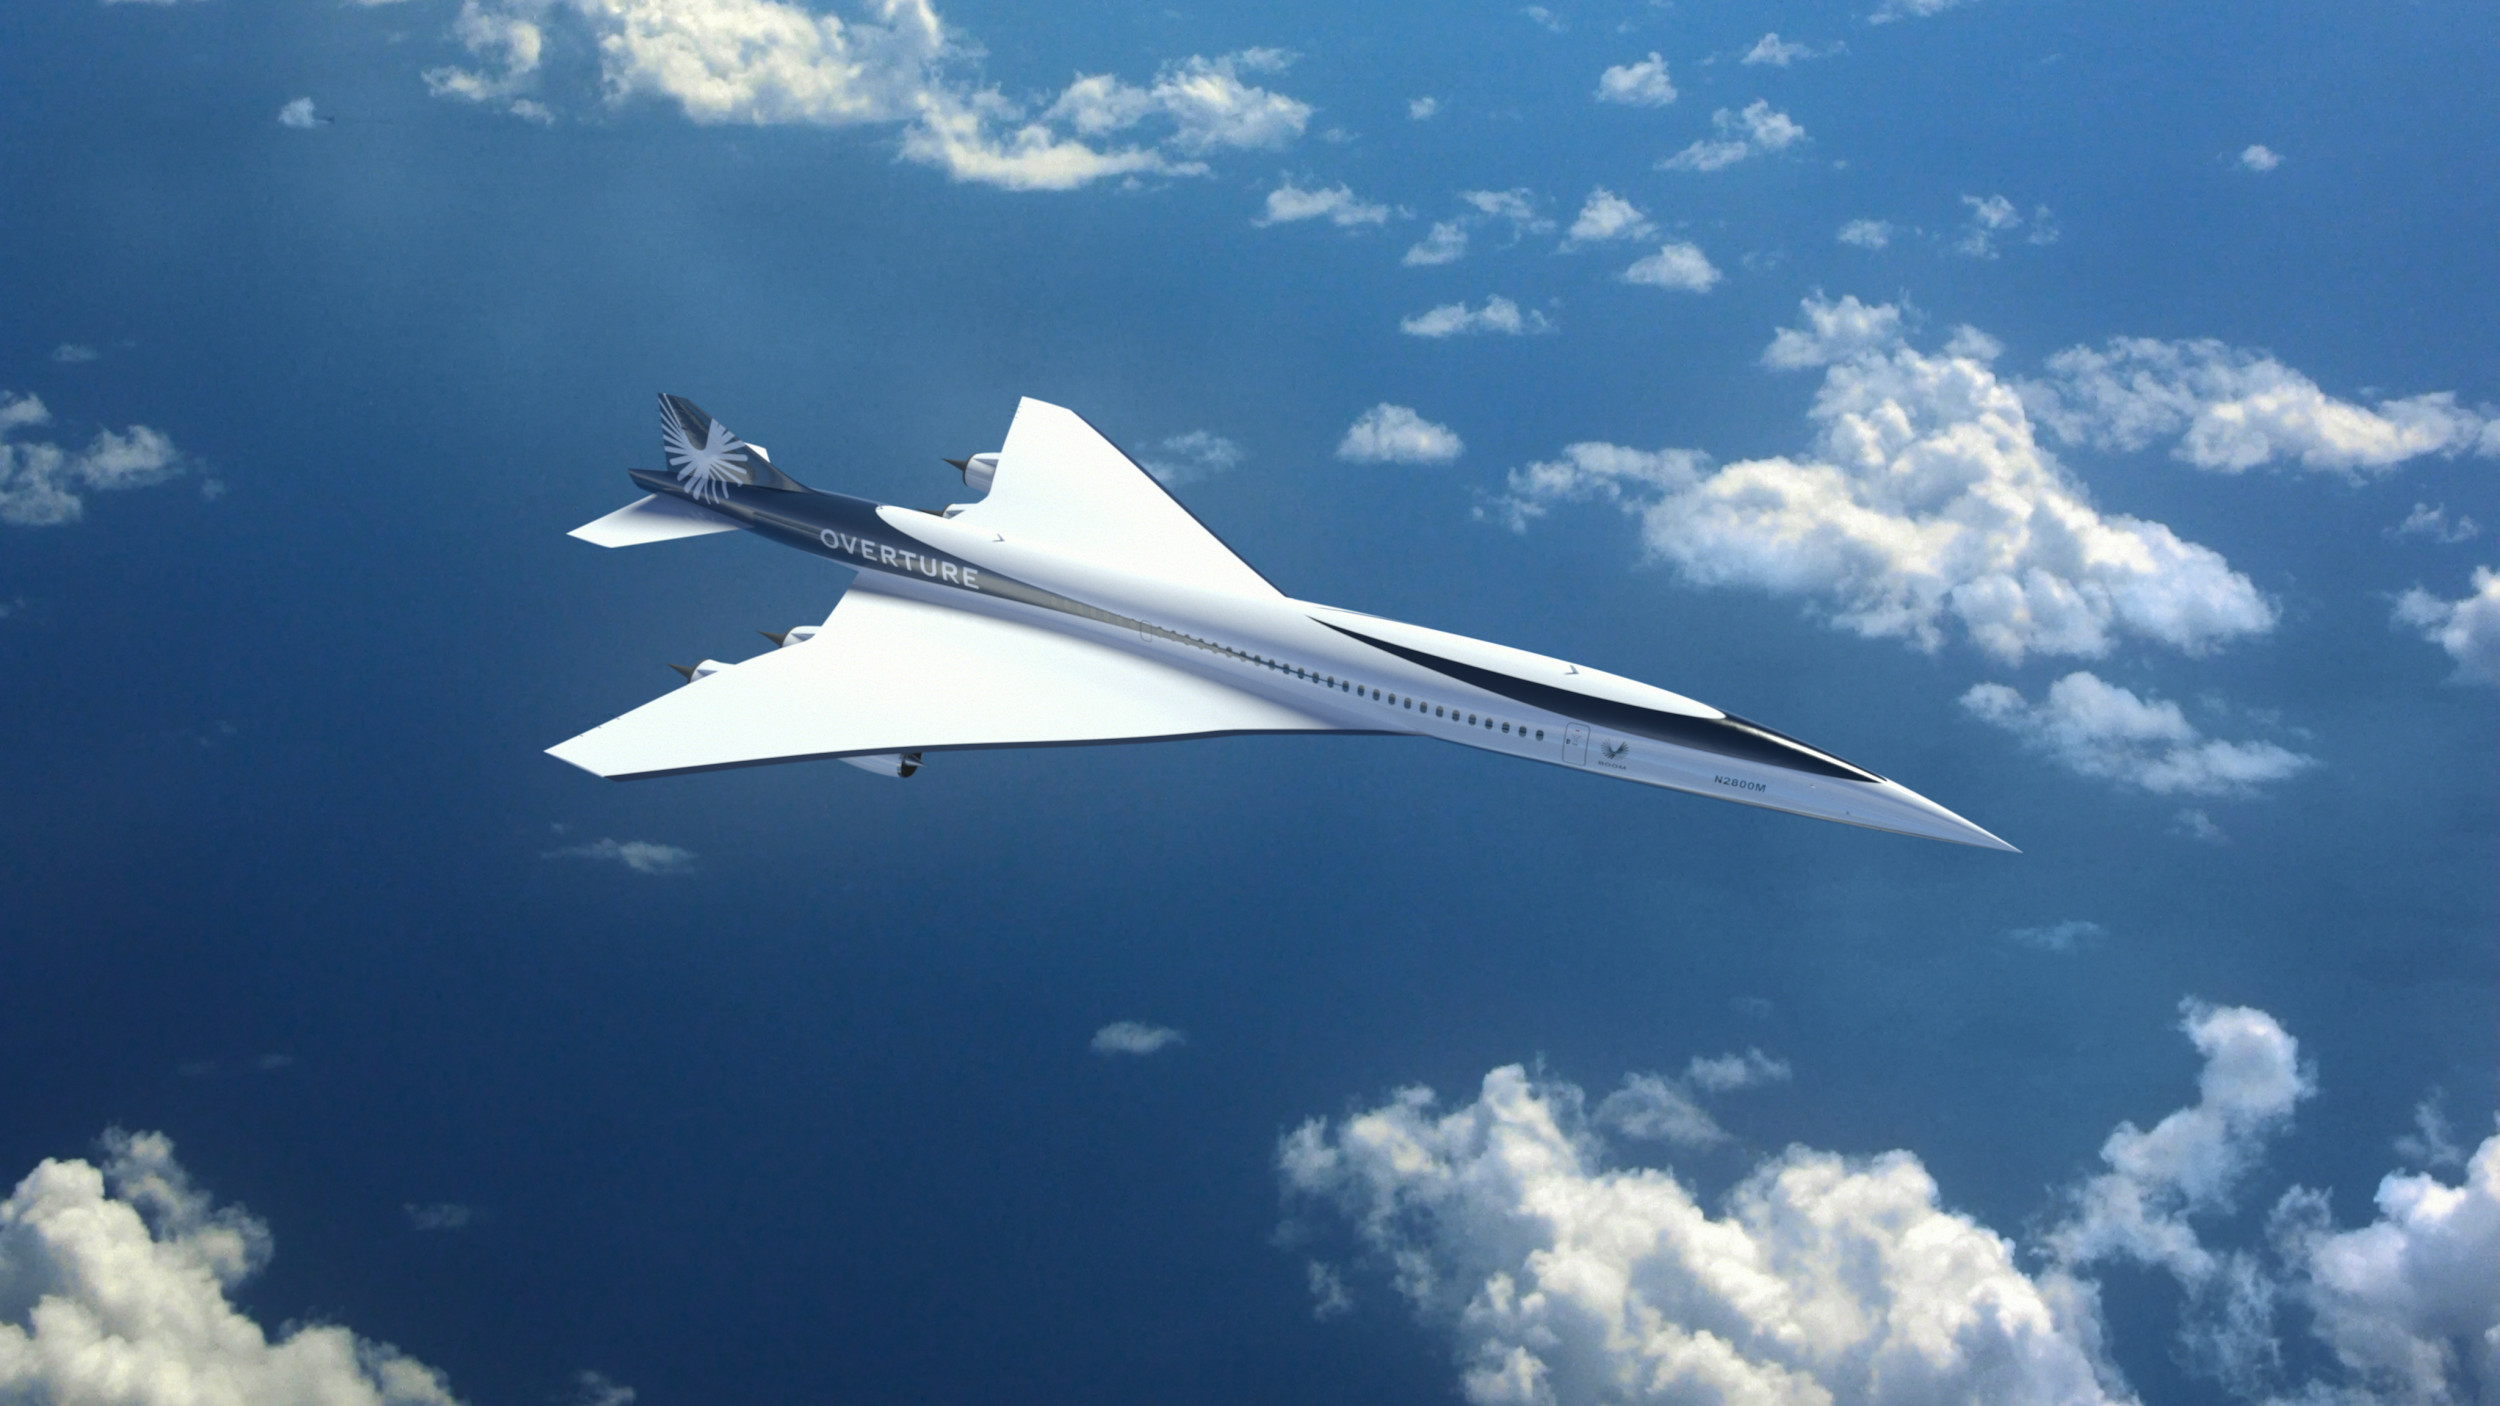 Will boom supersonic jets revolutionize air travel?